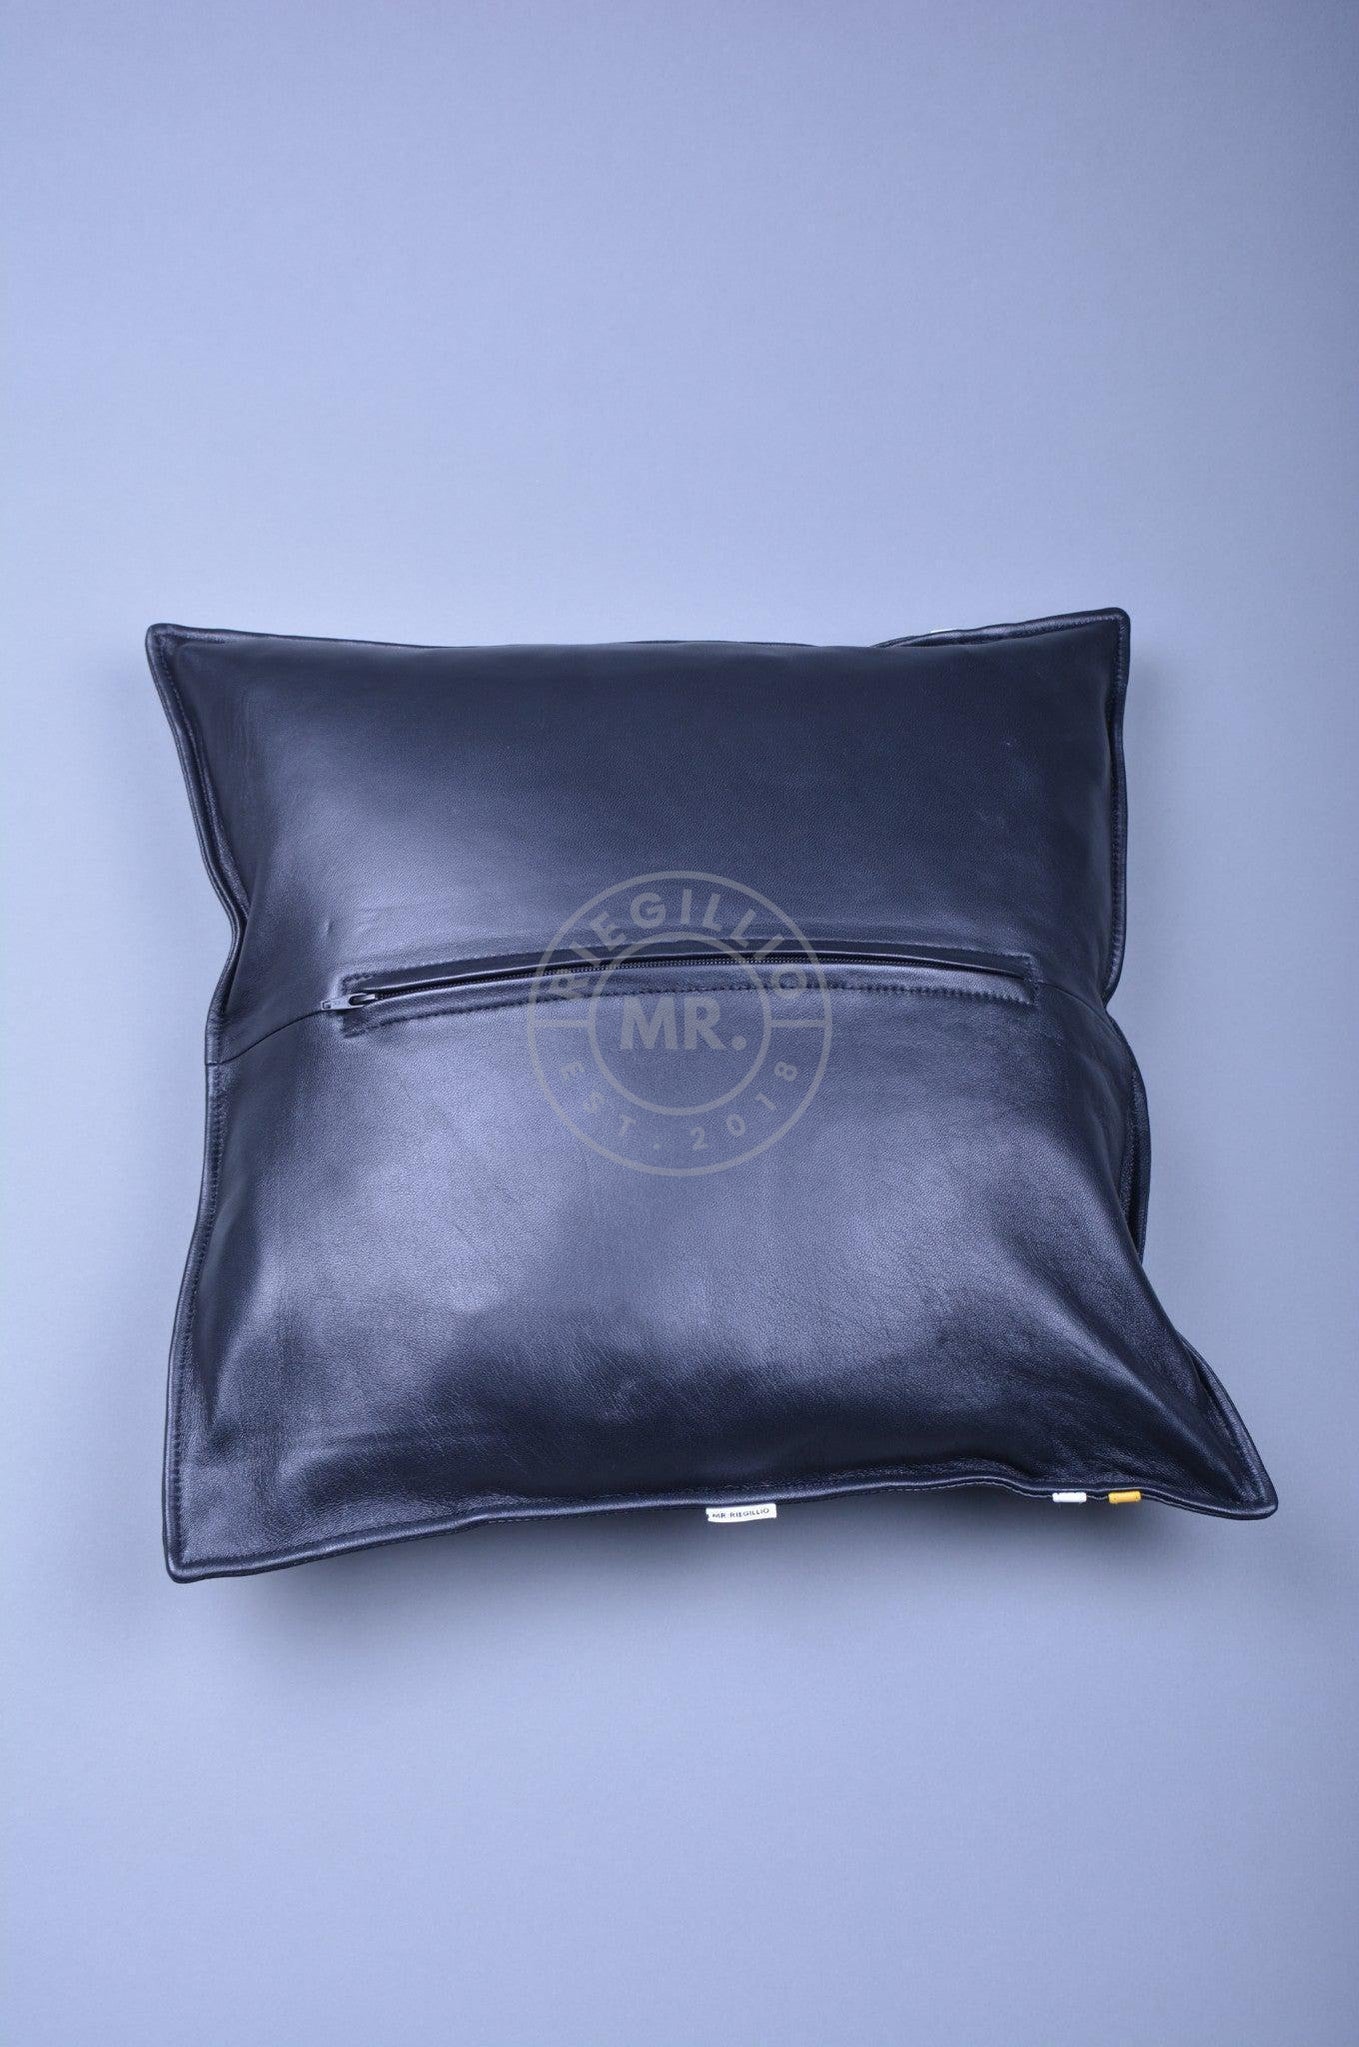 Black Leather Pillow - White Stripe-at MR. Riegillio